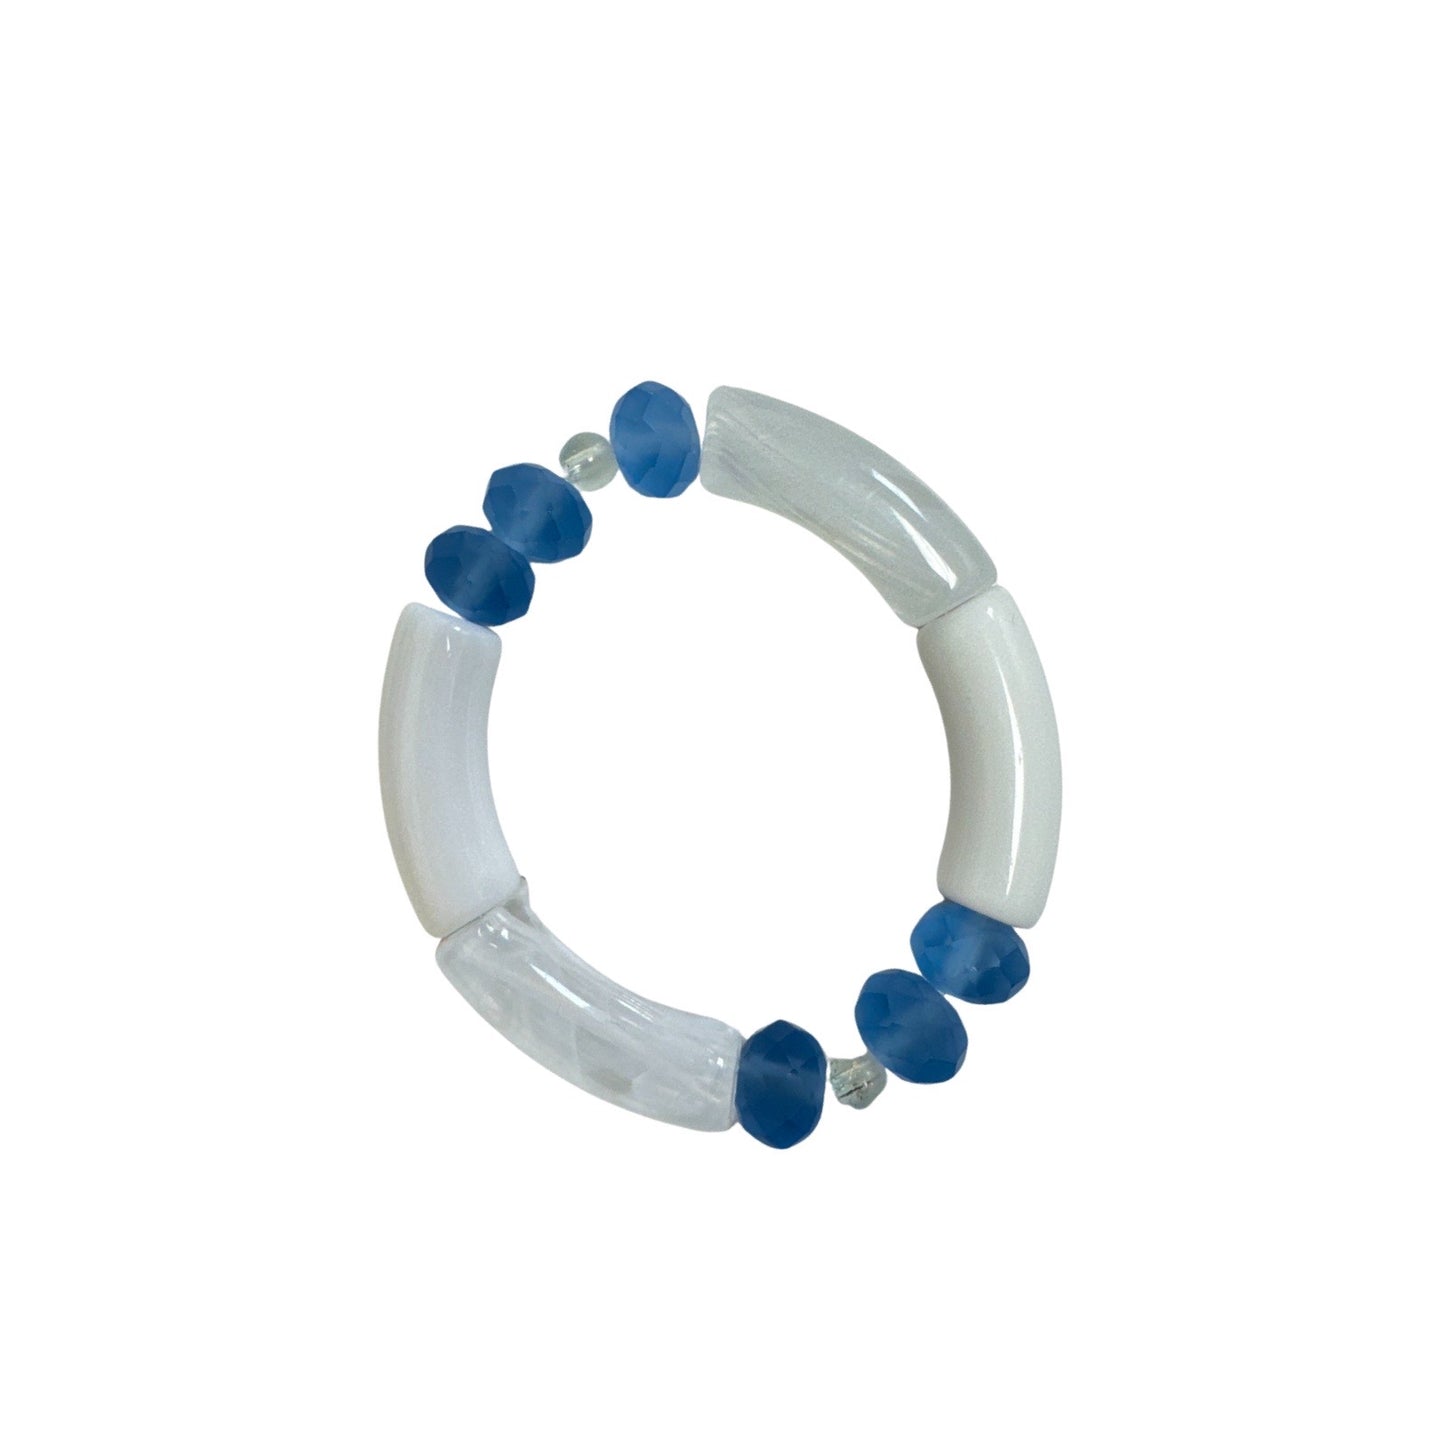 TJ's Bracelets - style 8 blue and white